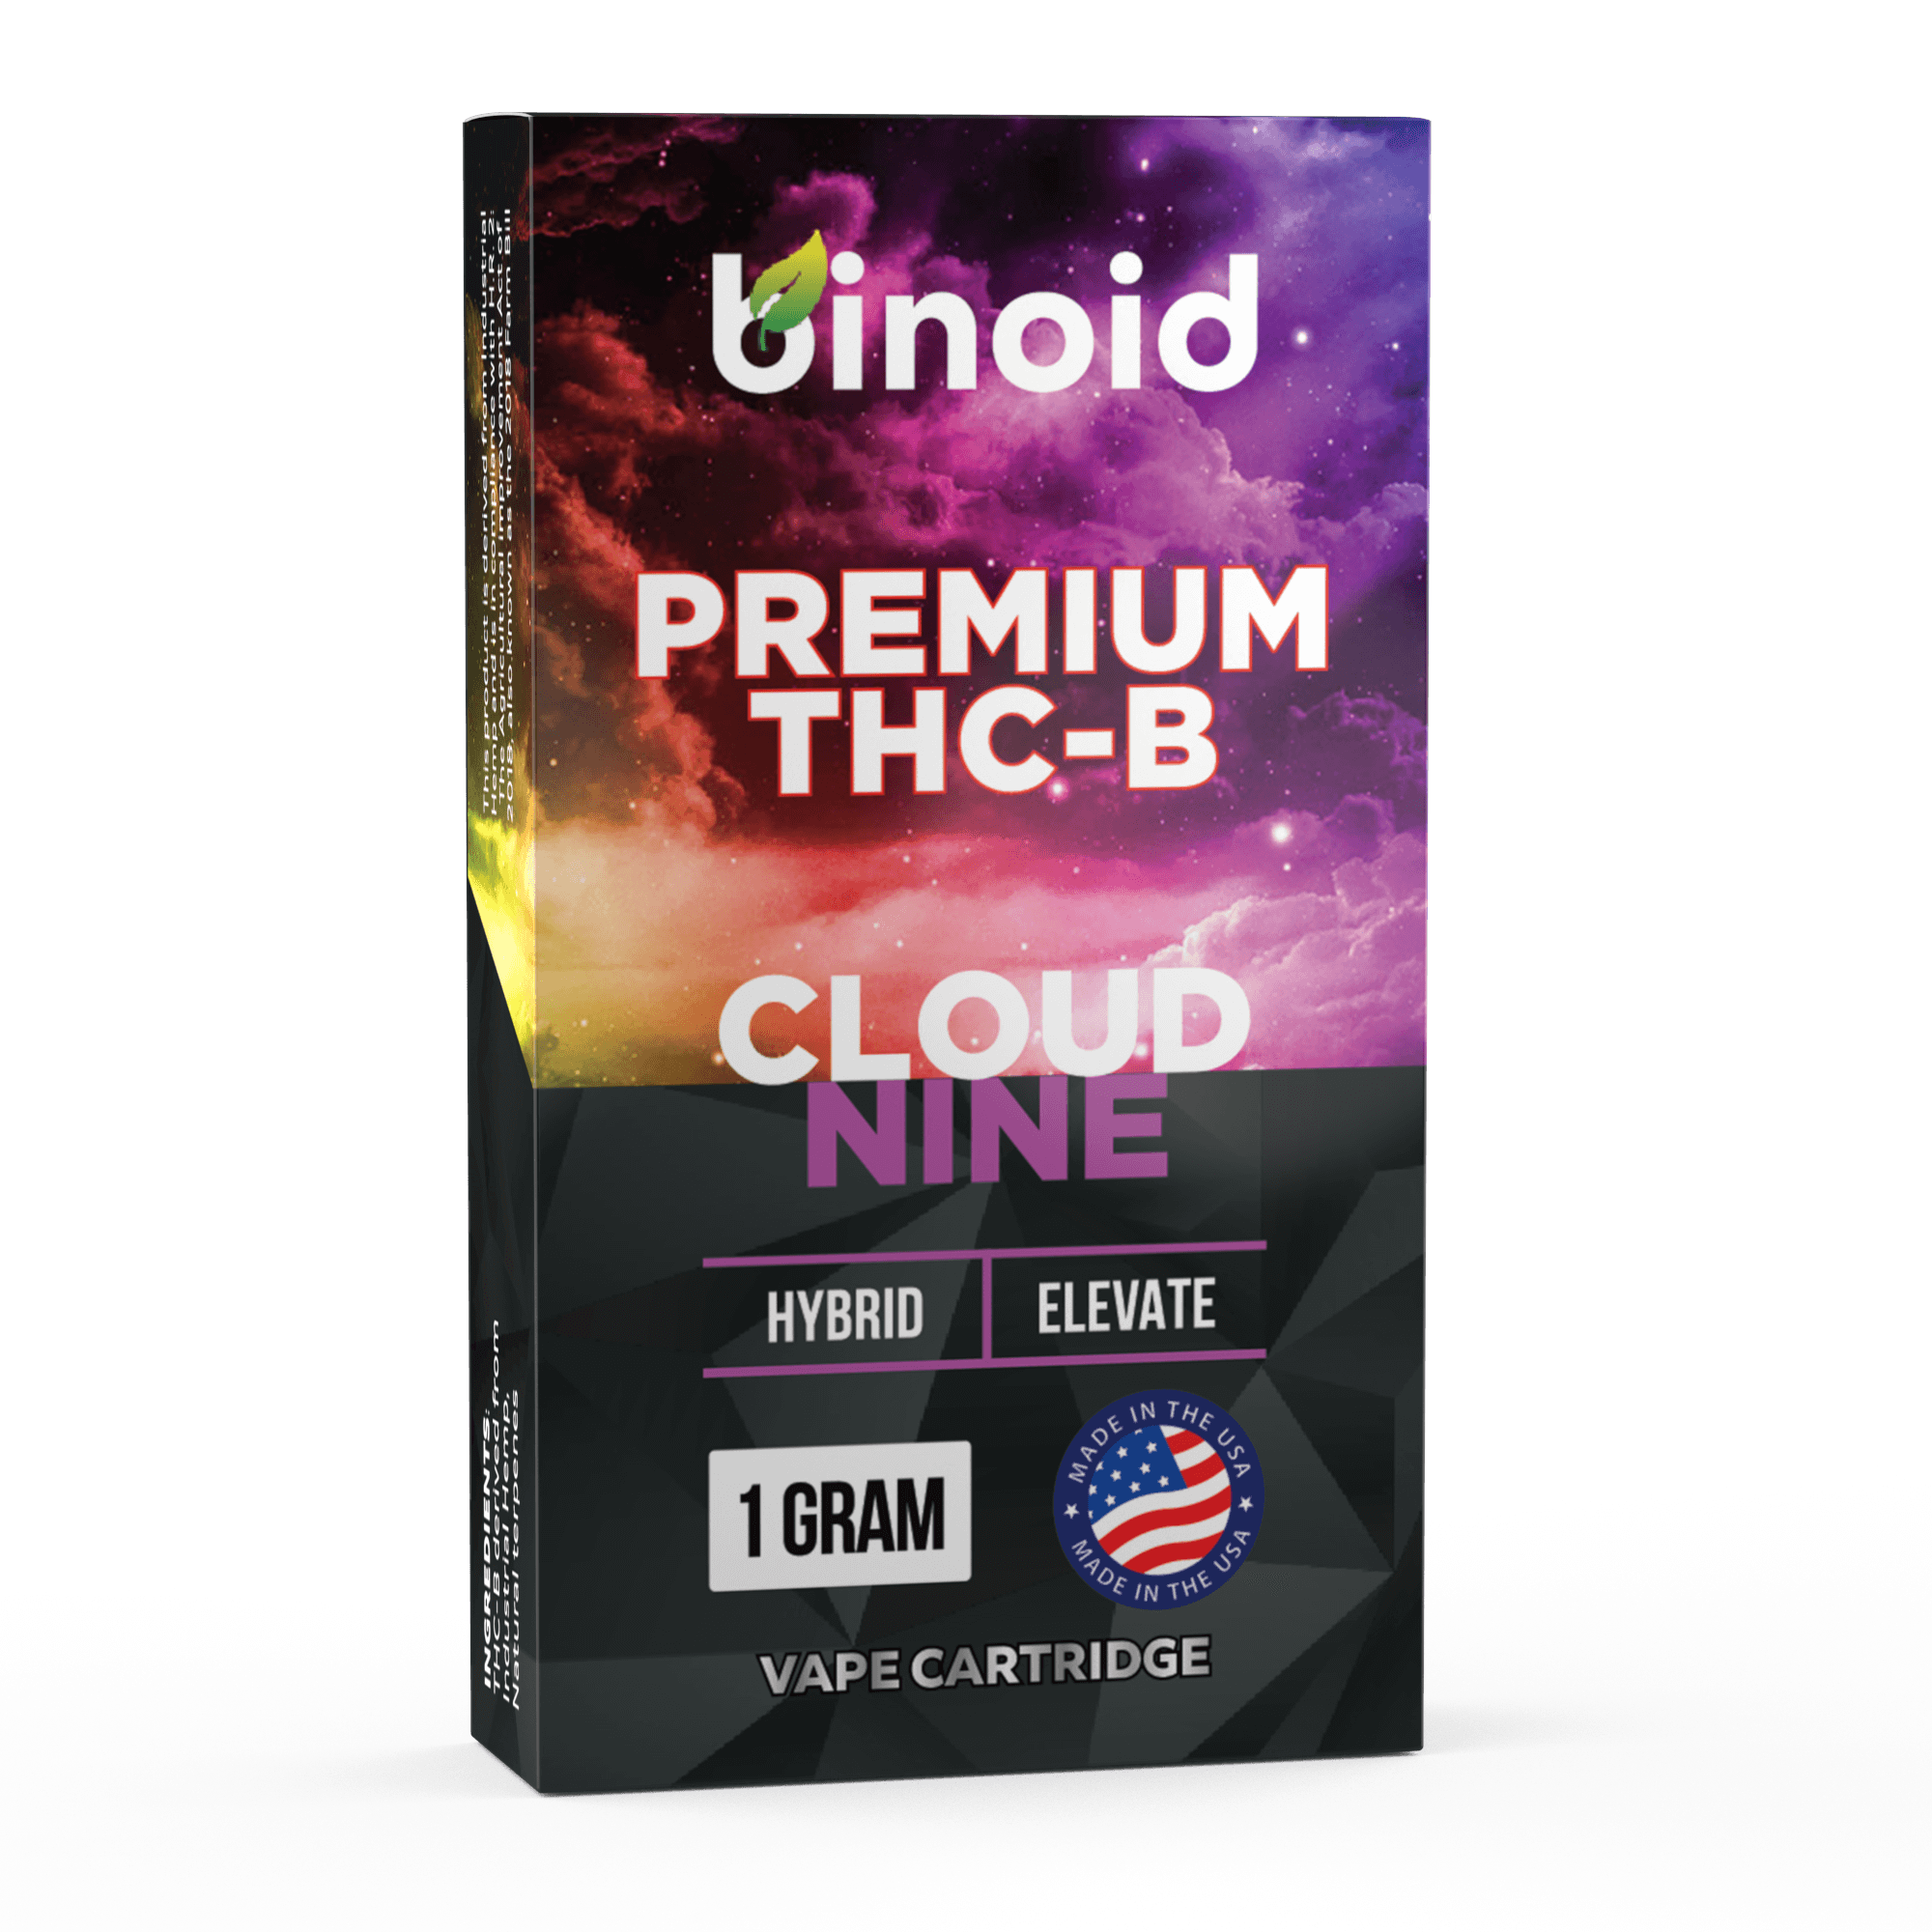 Binoid THC-B Vape Cartridge - Cloud Nine Best Price